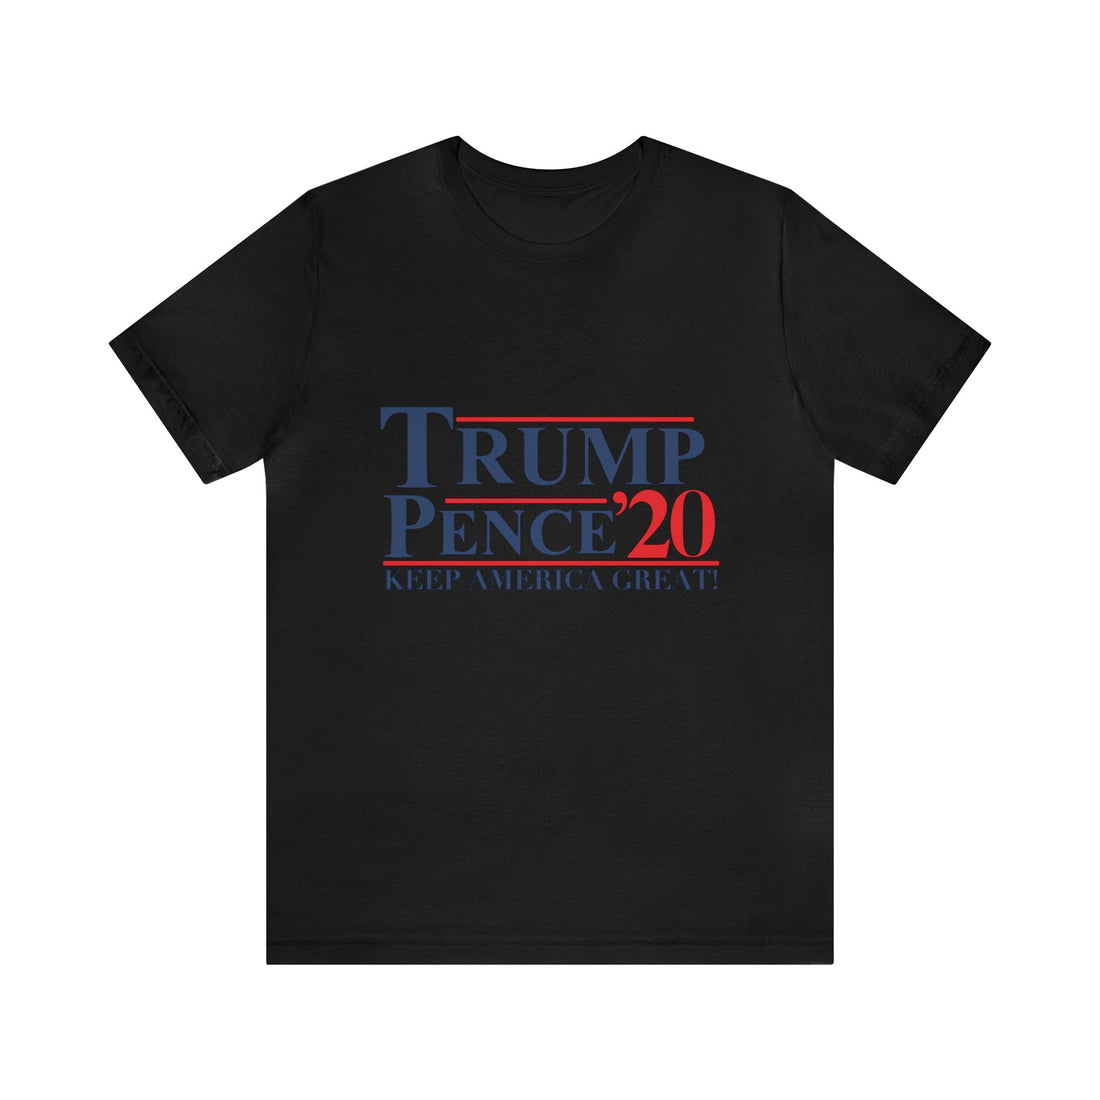 Trump Pence 2020 Premium Short Sleeve T-Shirt